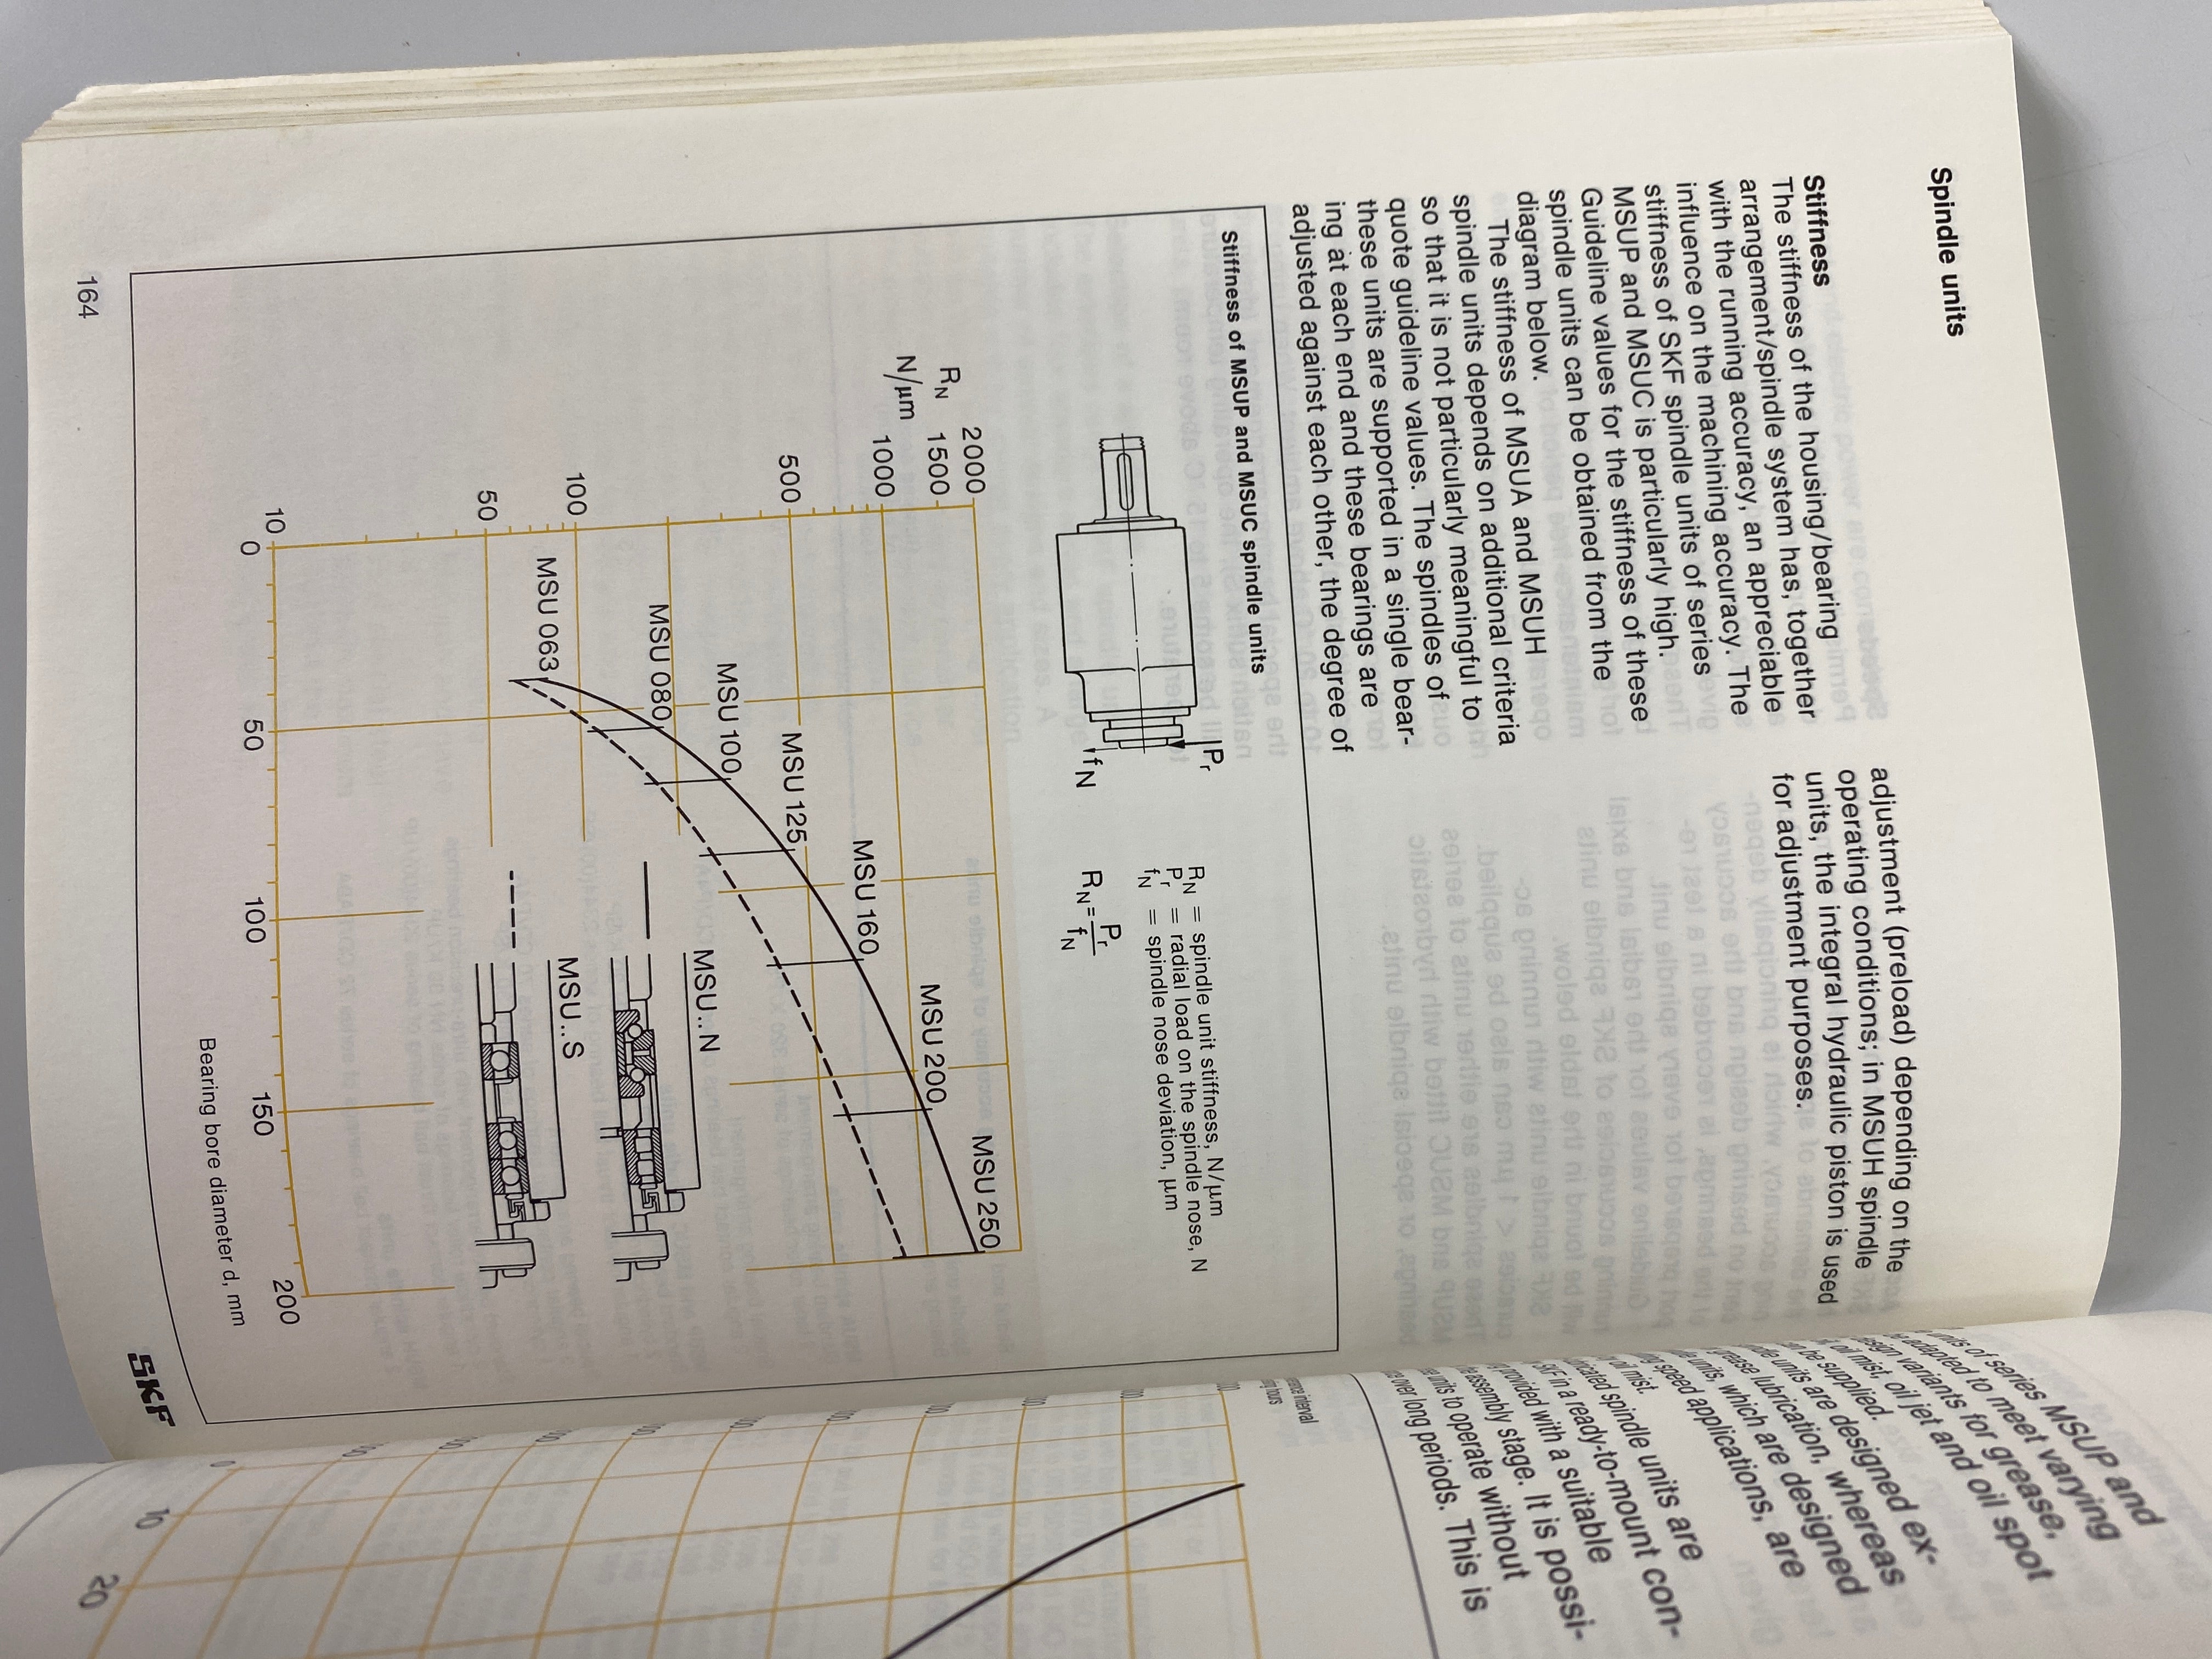 SKF Precision Bearings Handbook (1987) SC